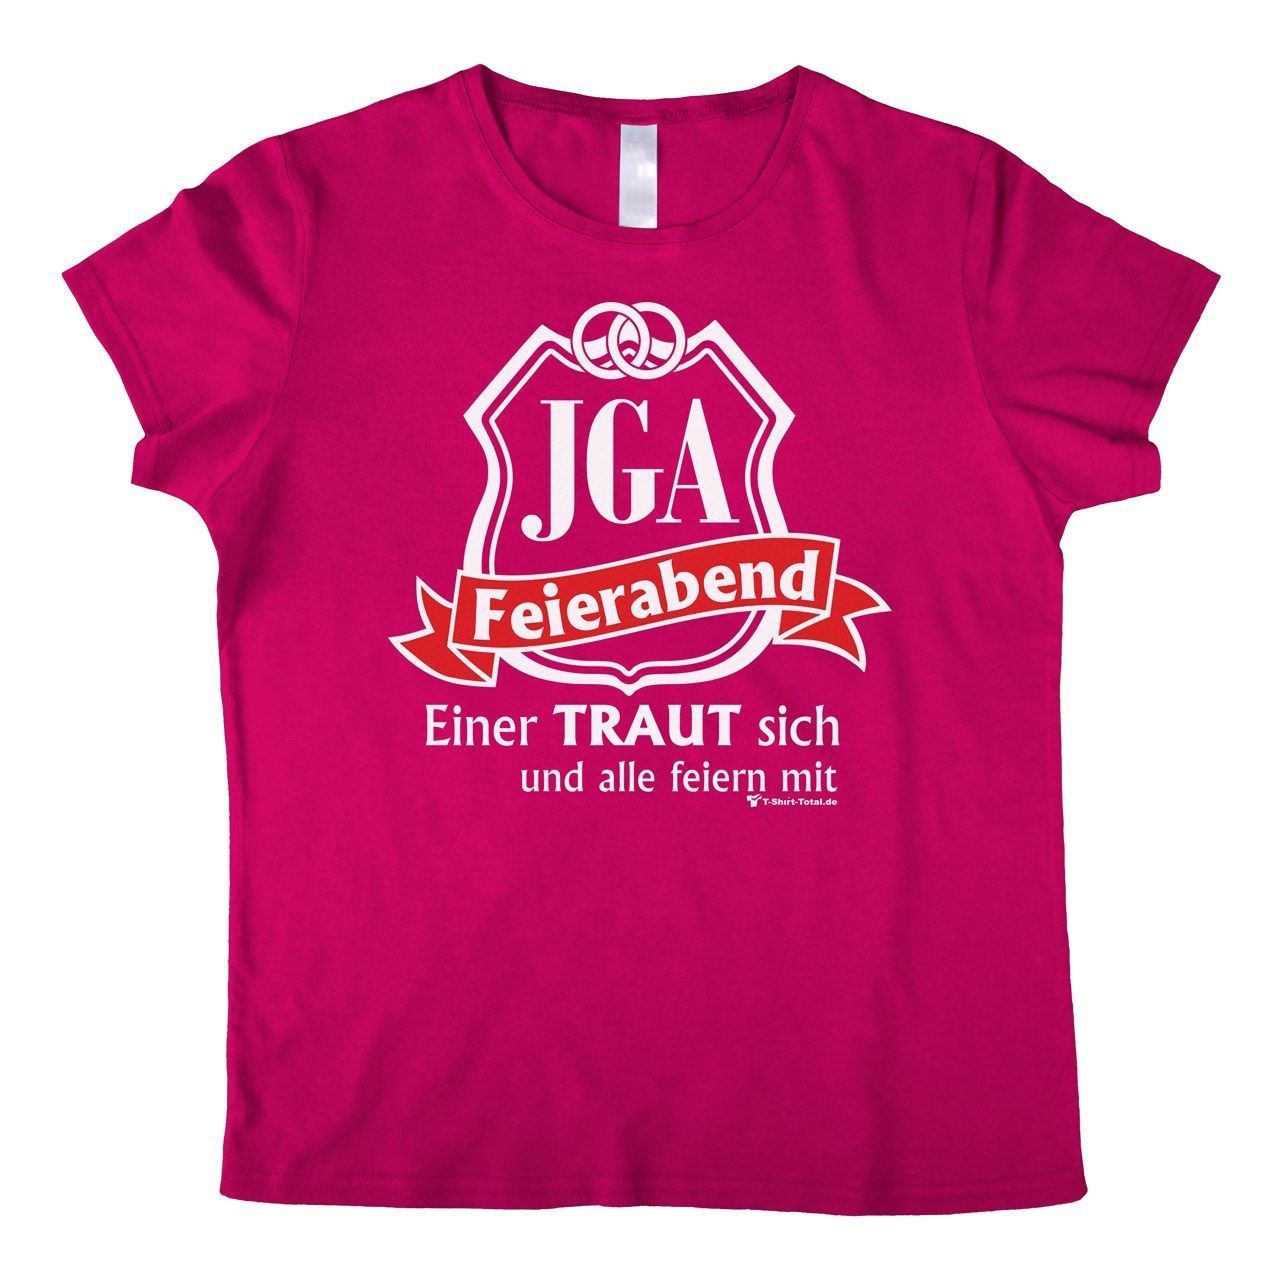 JGA Feierabend Woman T-Shirt pink Small